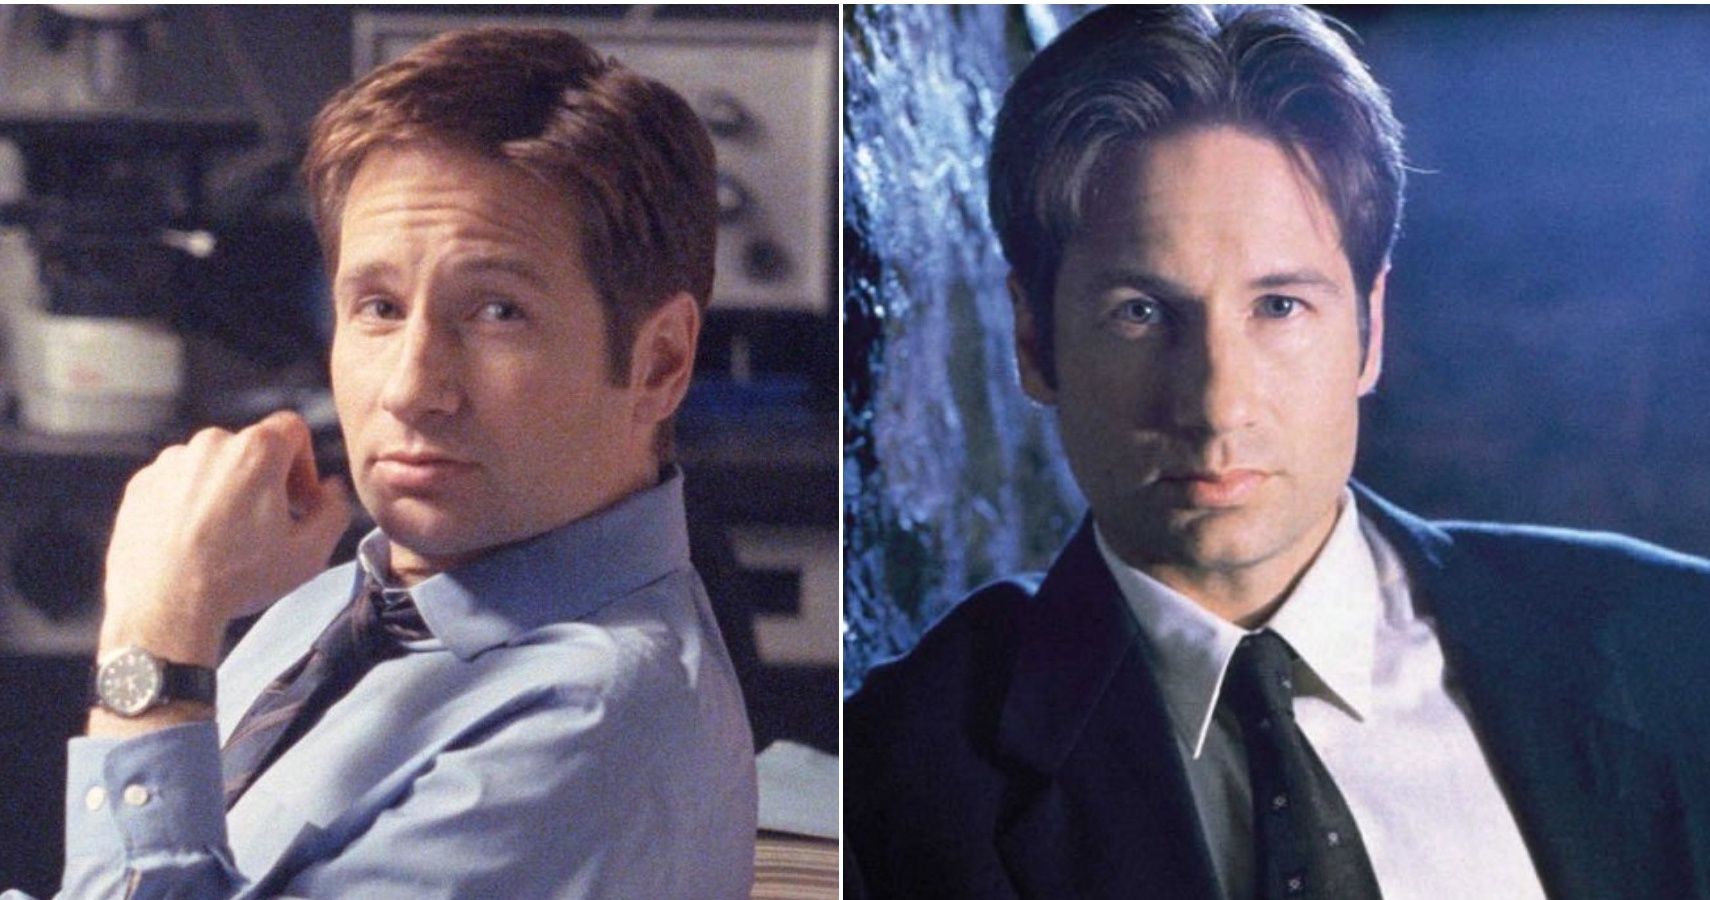 Fox Mulder in The X-Files